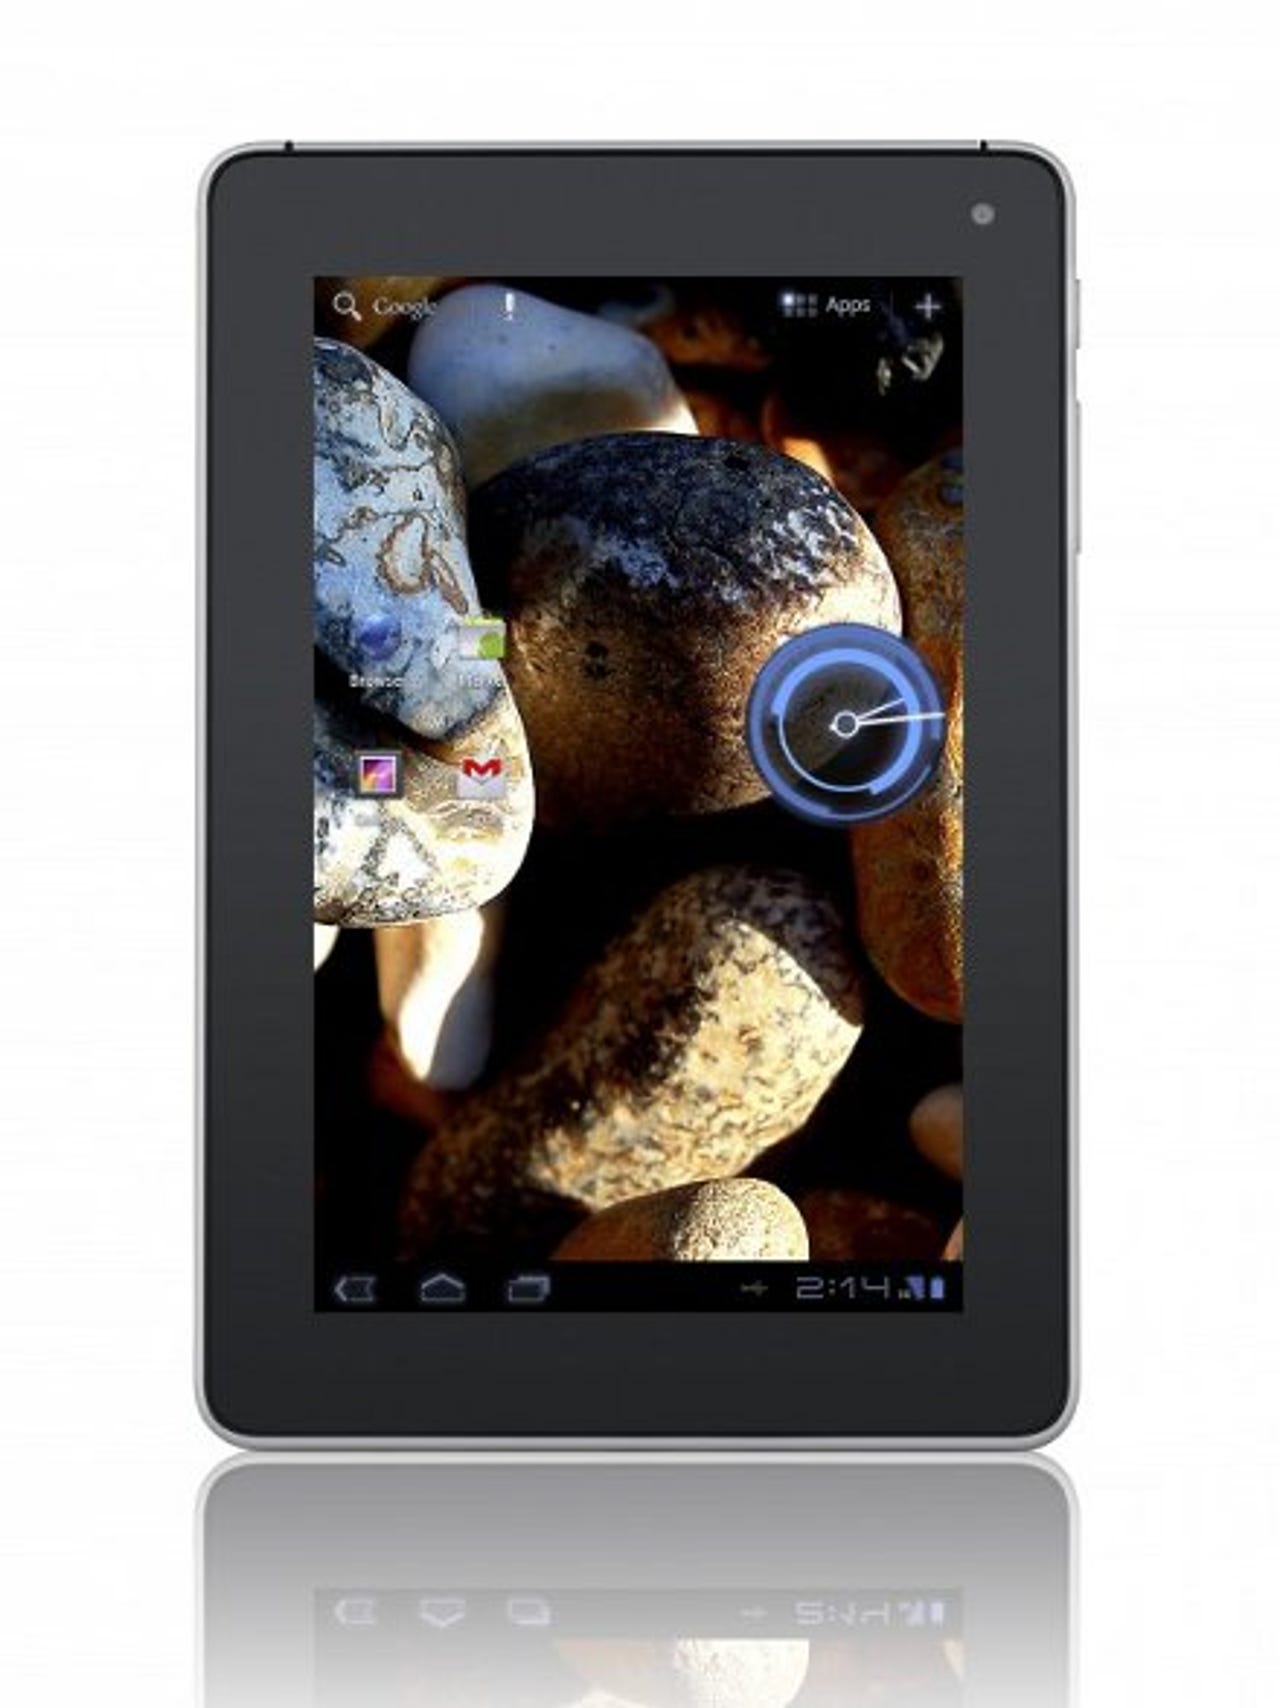 40154833-2-440-587-orange-tahiti-android-tablet-homescreen.jpg